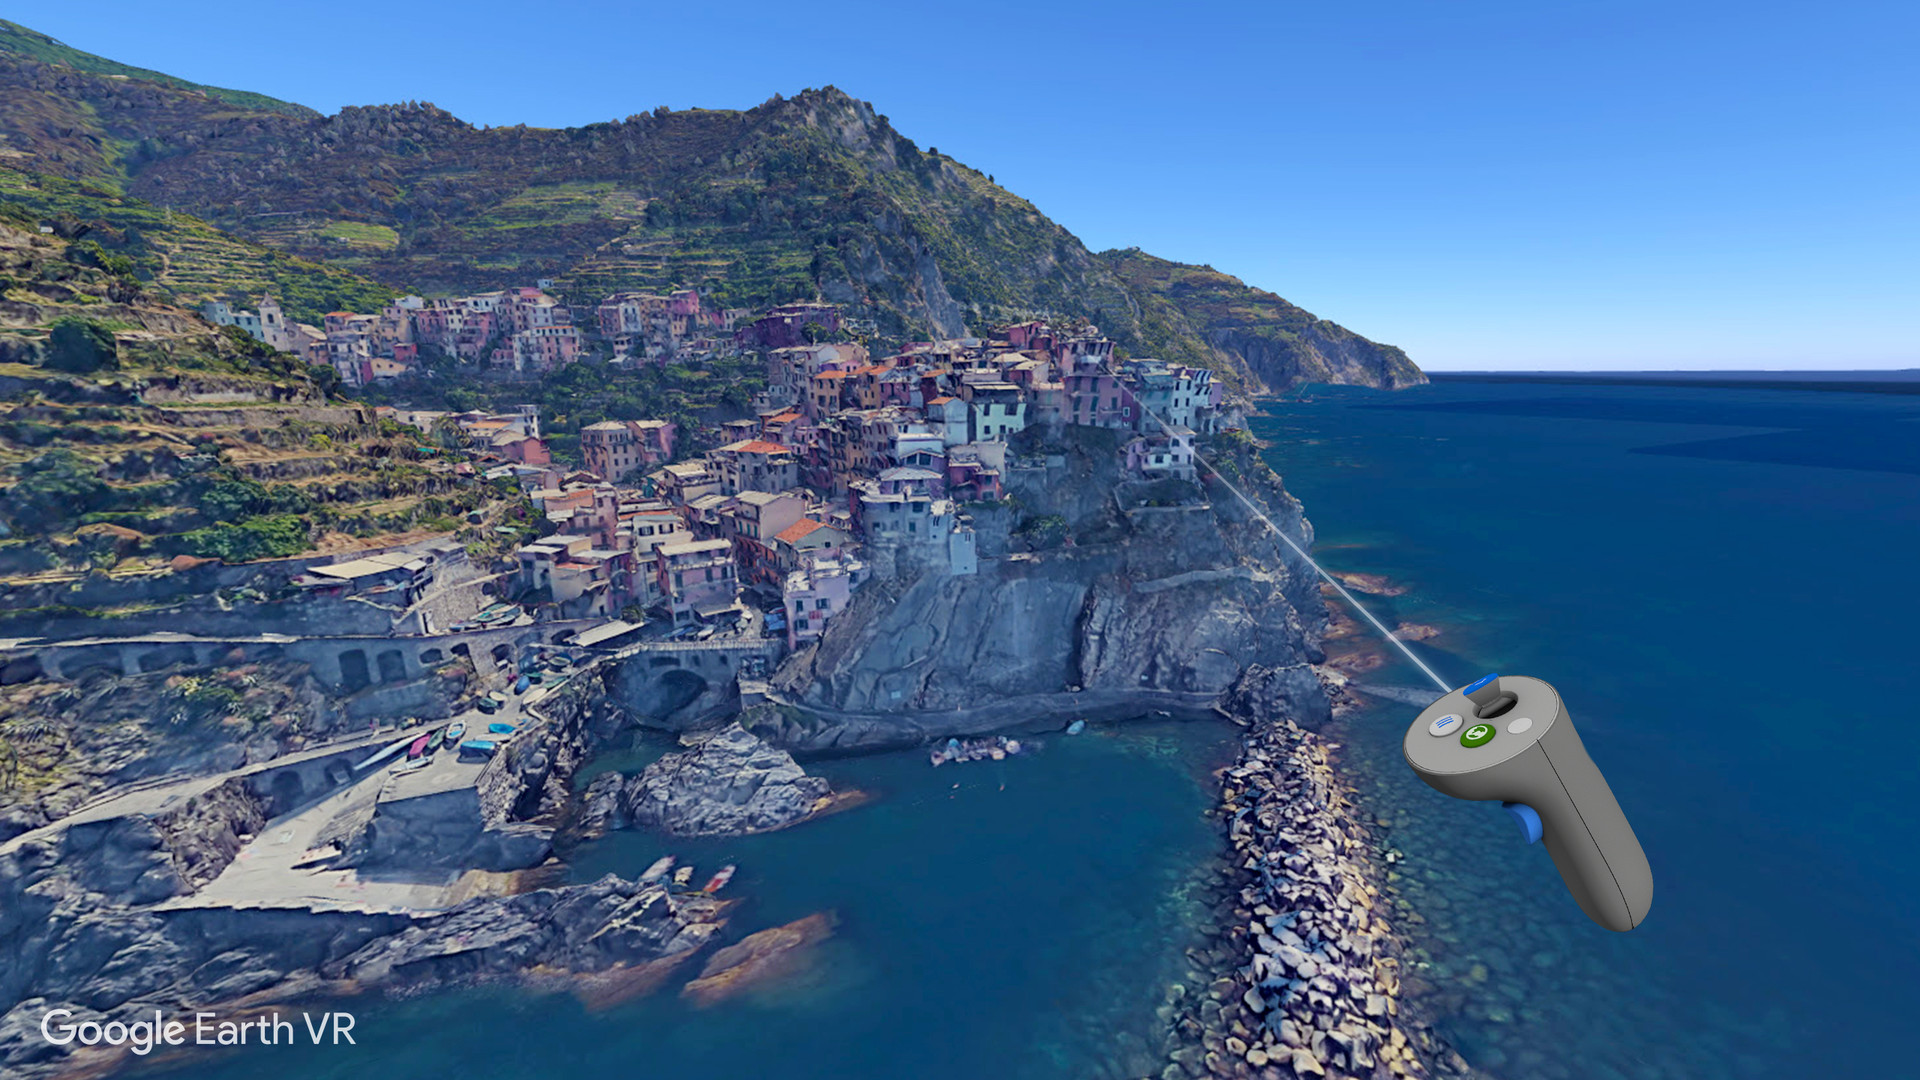 Google Earth VR on Steam